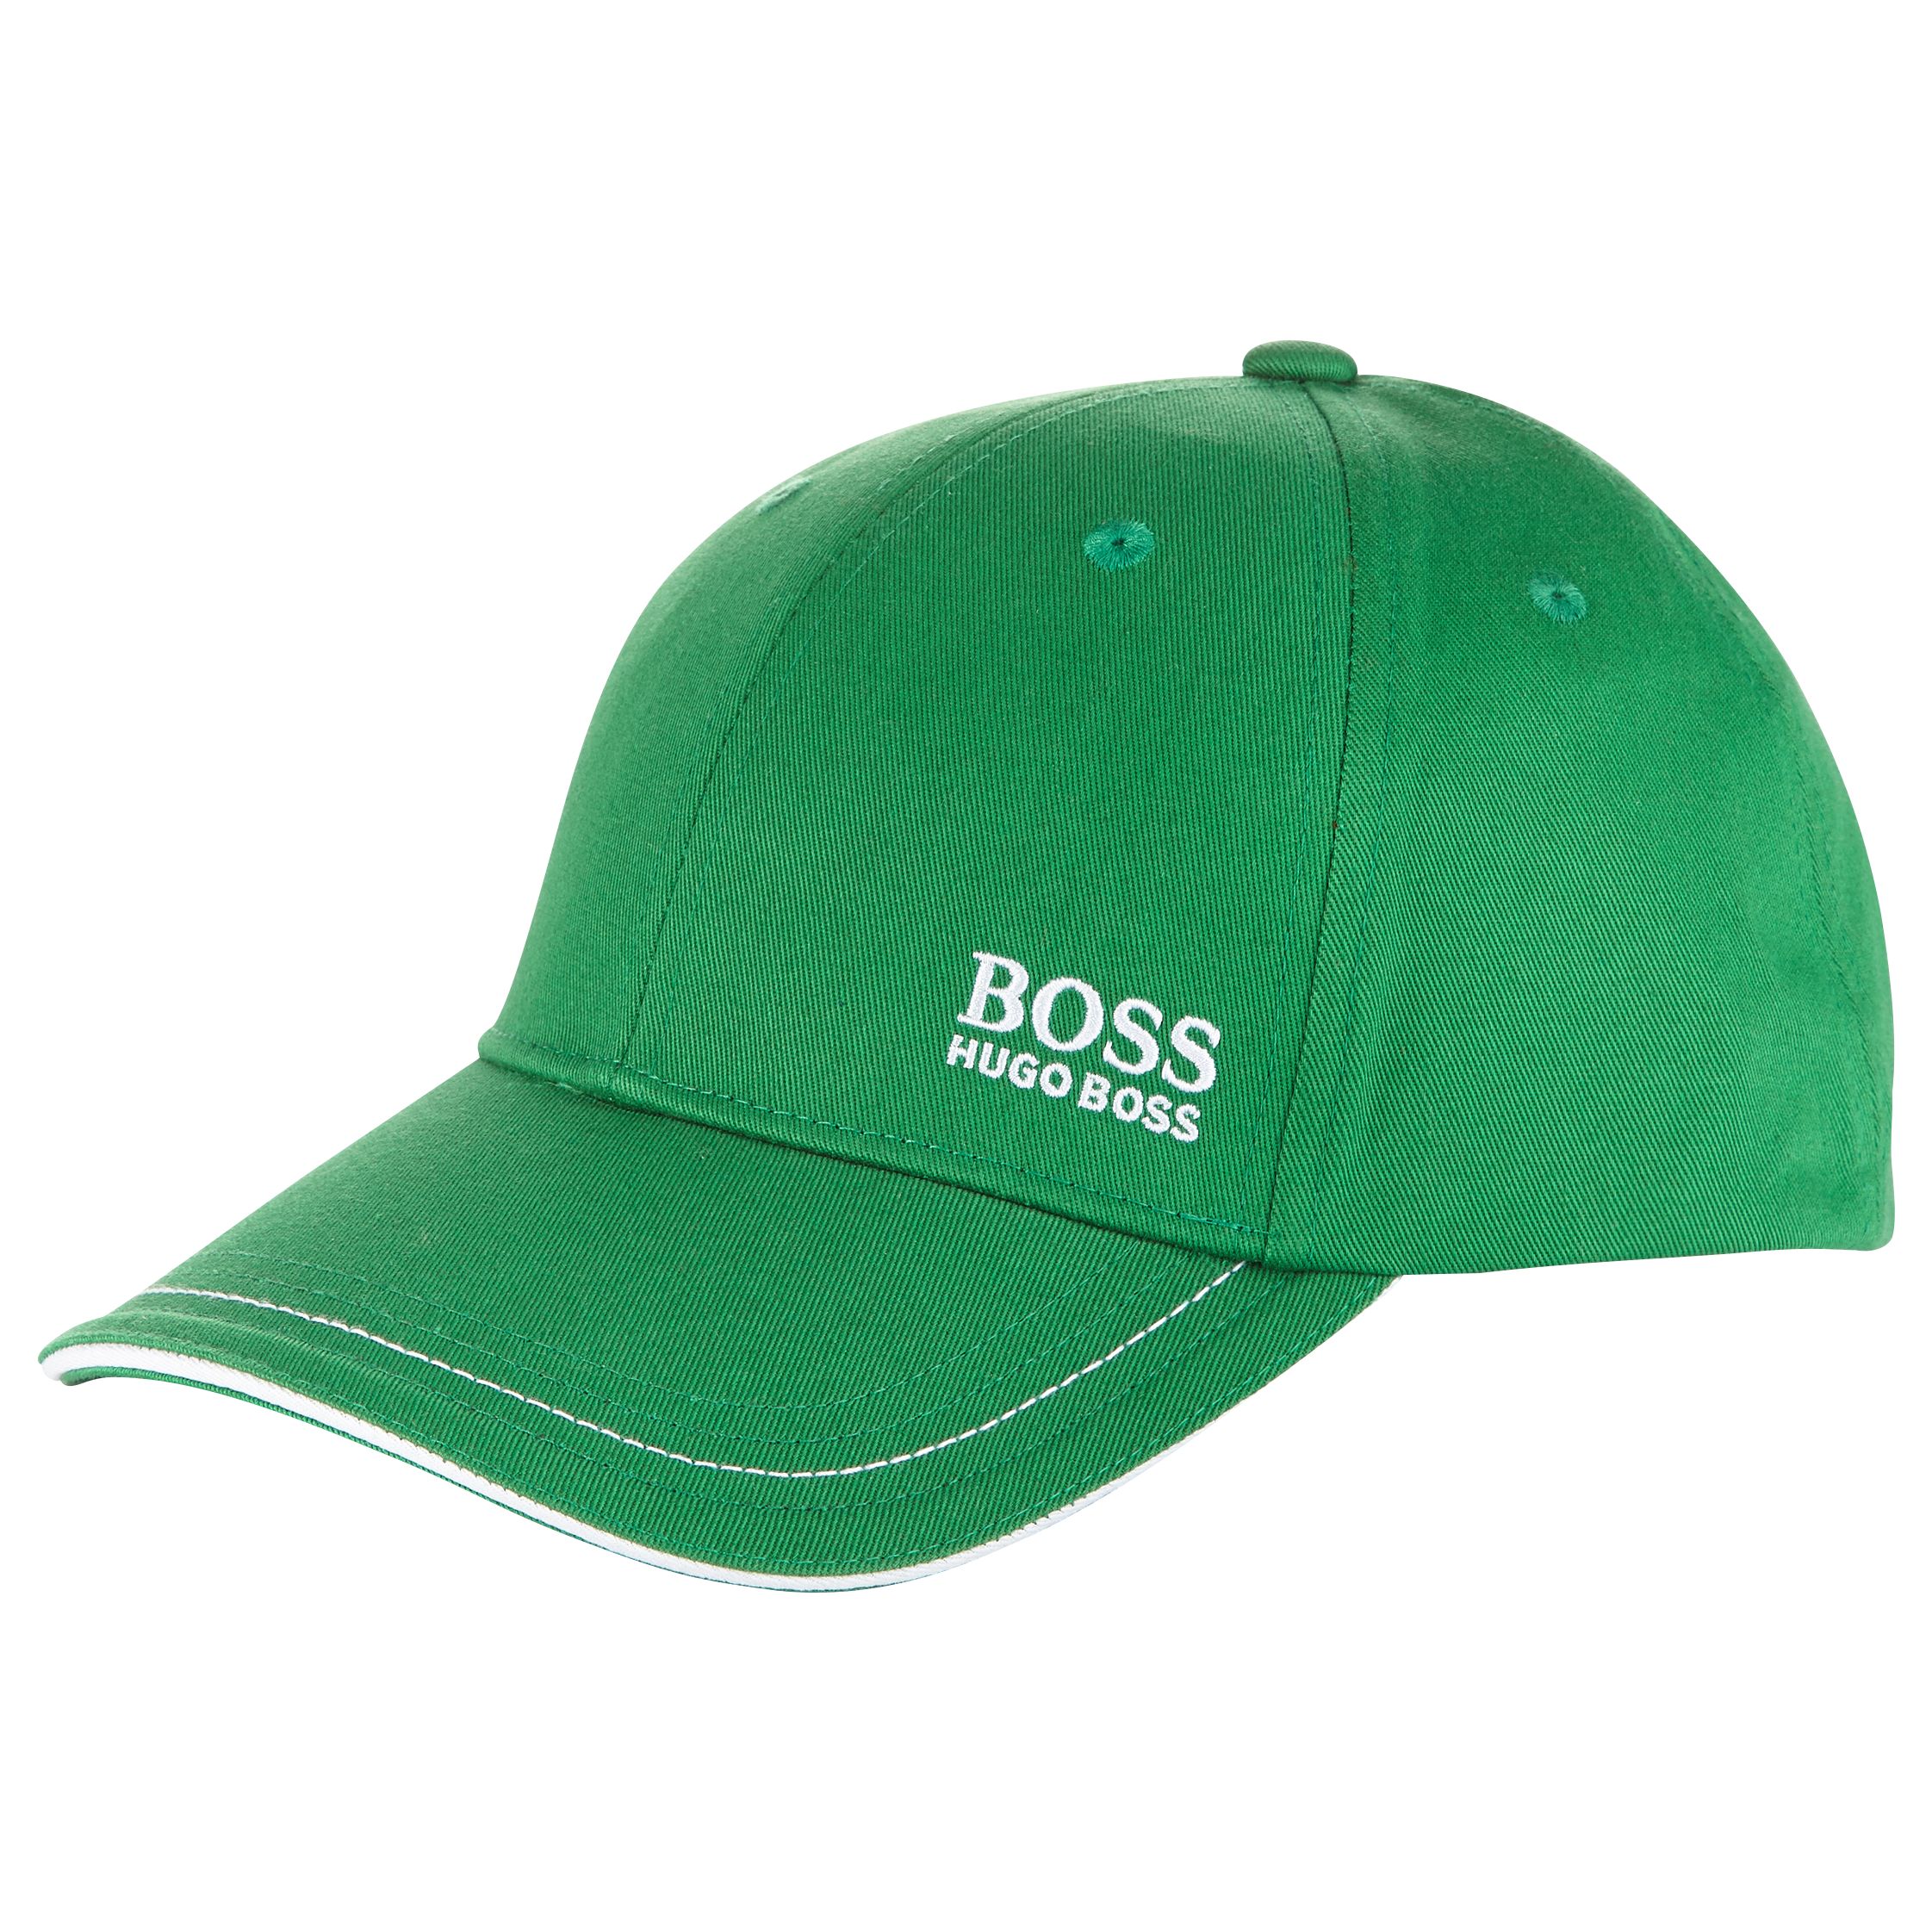 Green Pro Baseball Cap, One Size